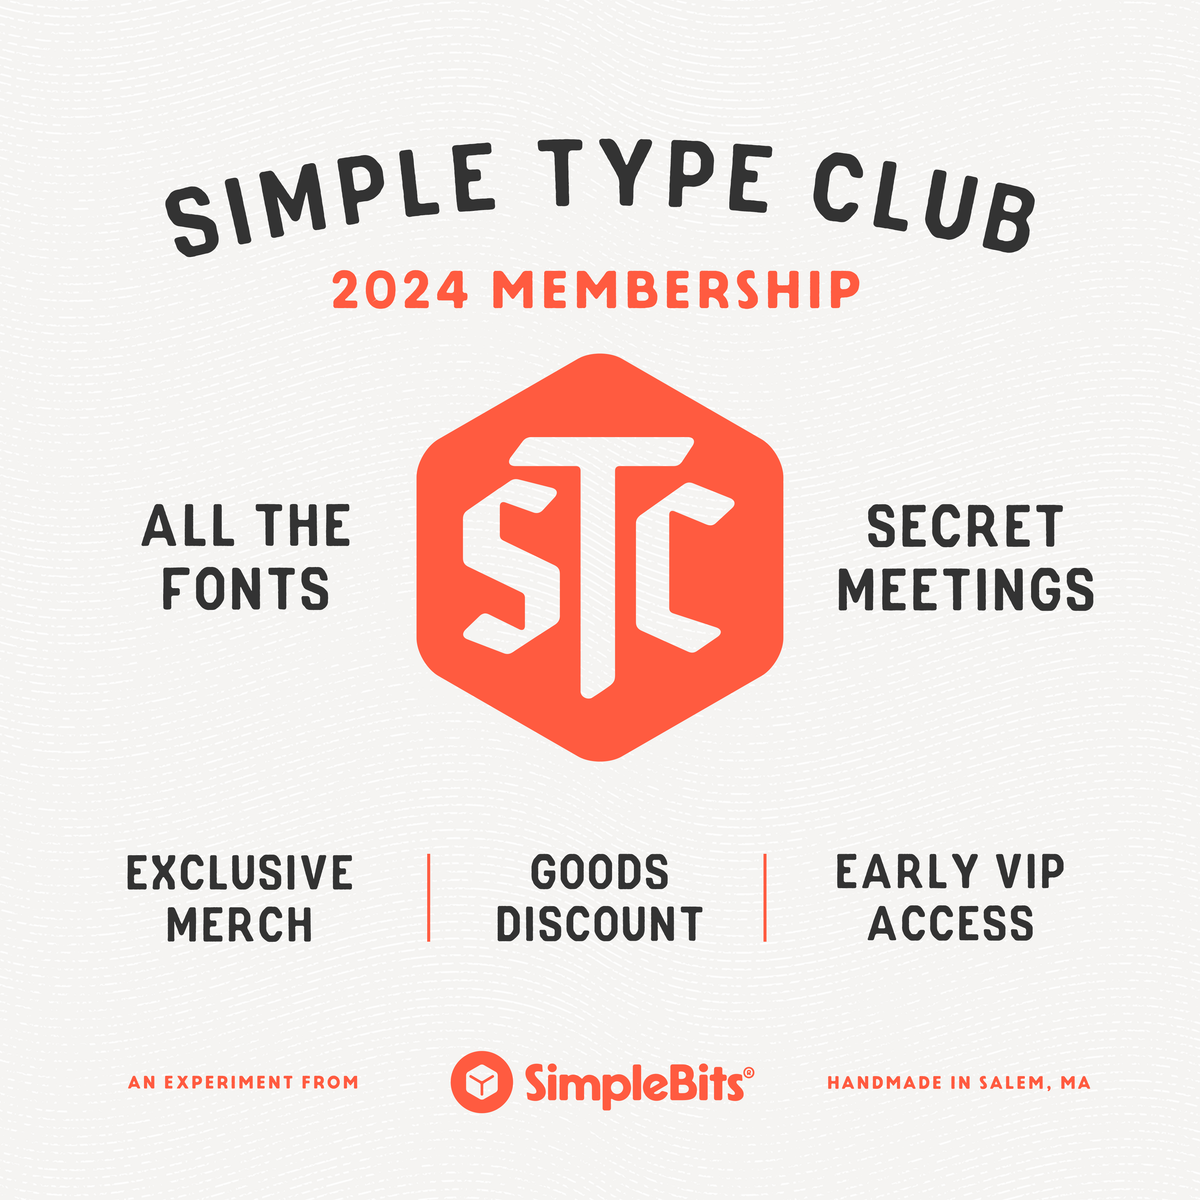 Simple Type Club 2024